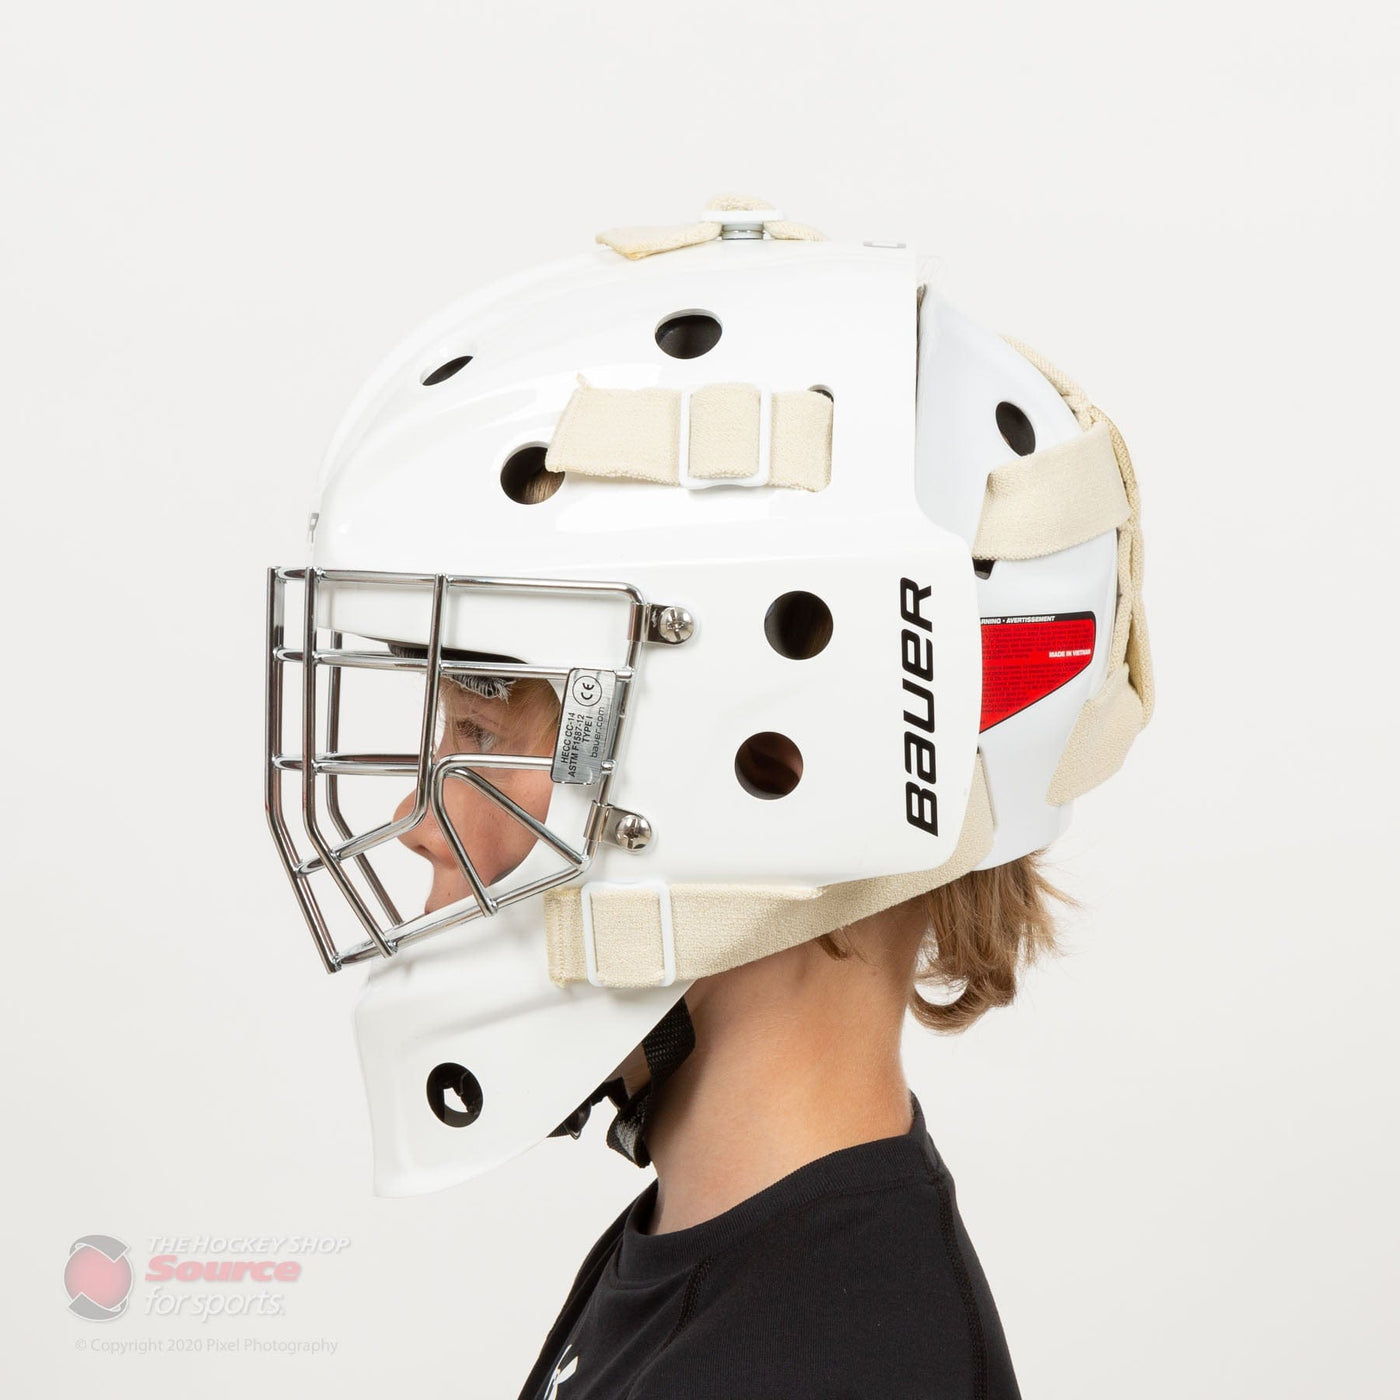 Bauer 930 Youth Goalie Mask